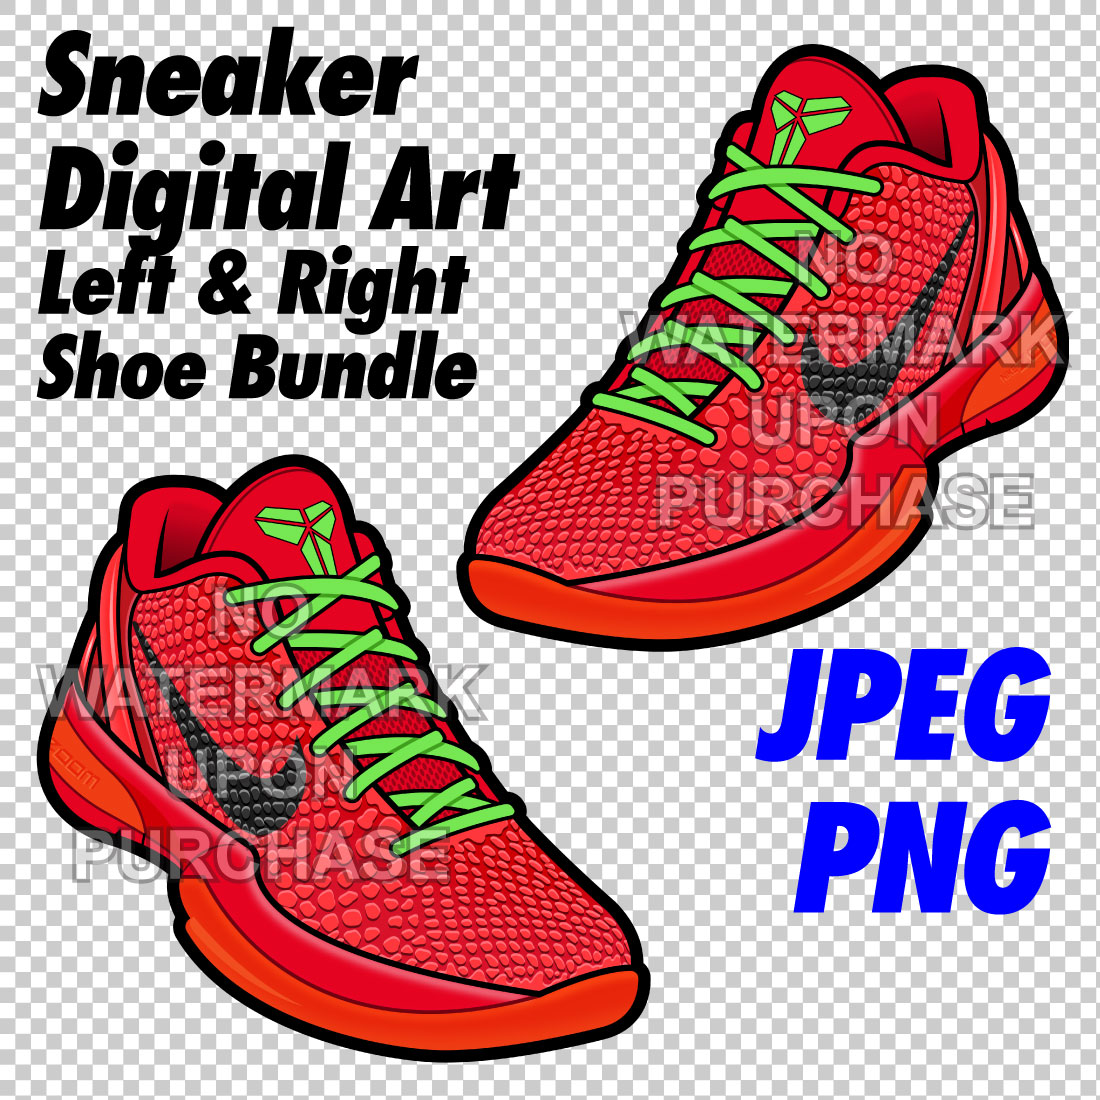 Kobe 6 Reverse Grinch JPEG PNG right & left shoe bundle sneaker art cover image.